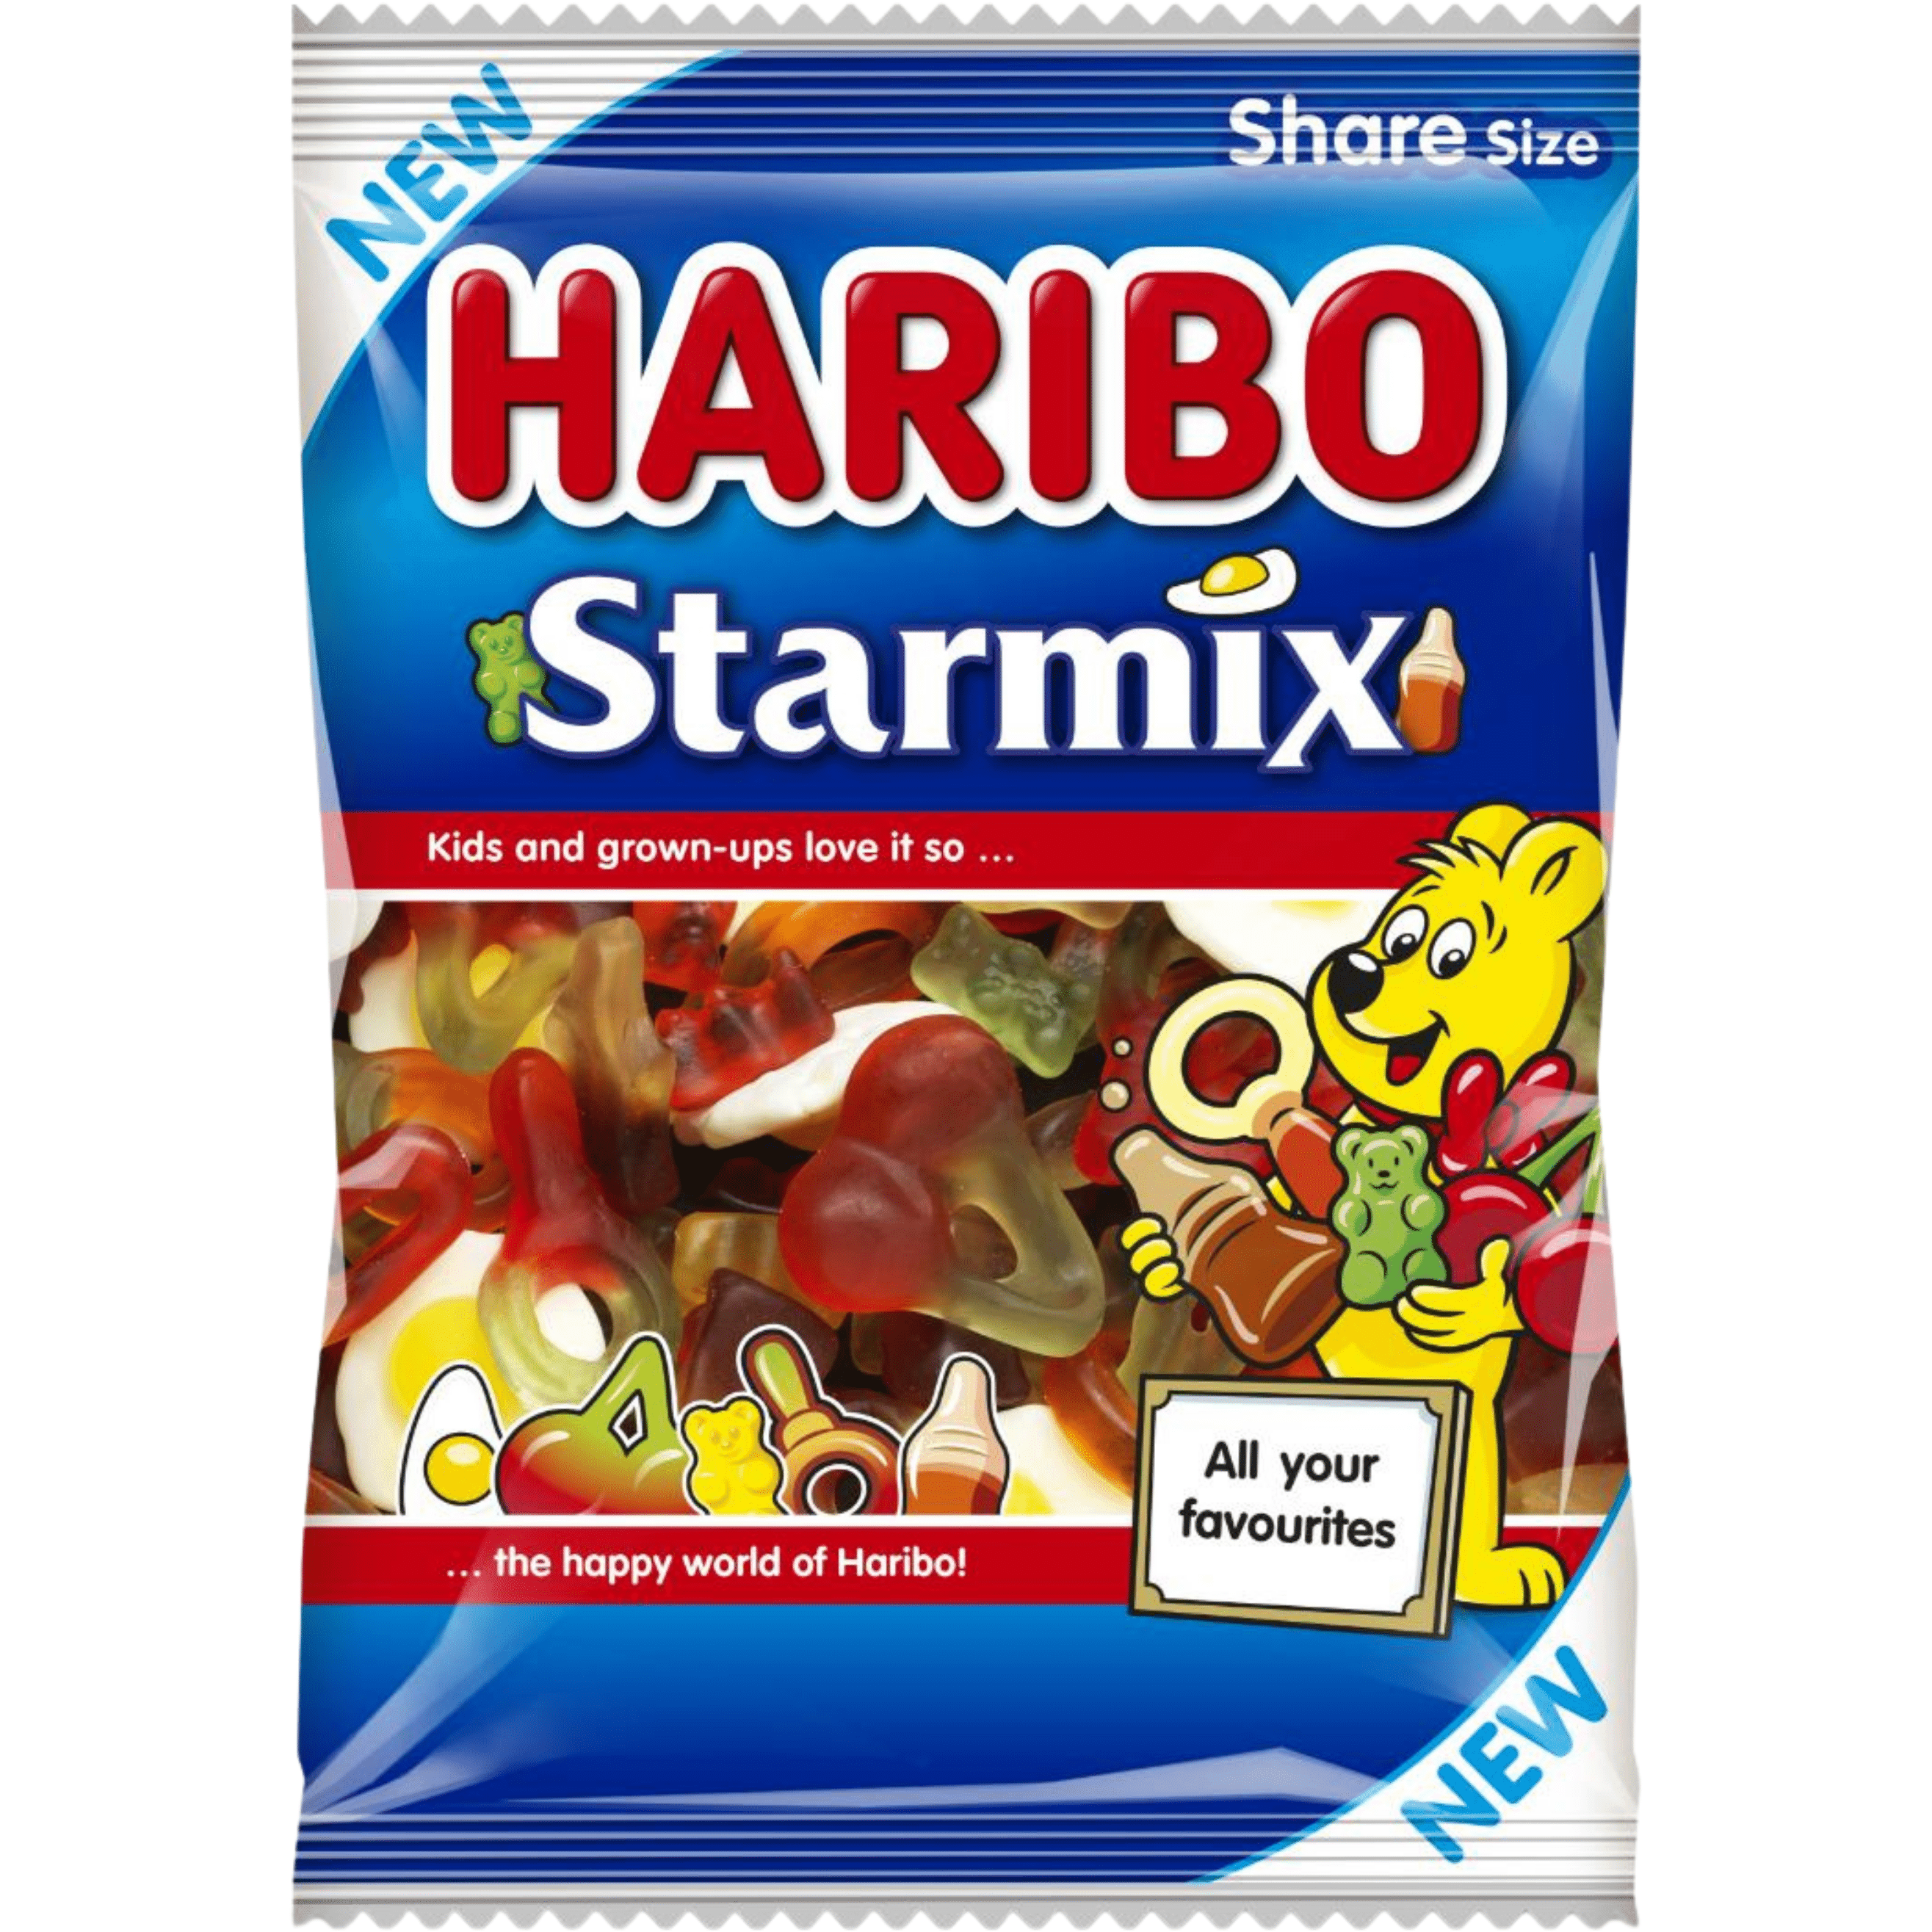 World mix Haribo - 2kg